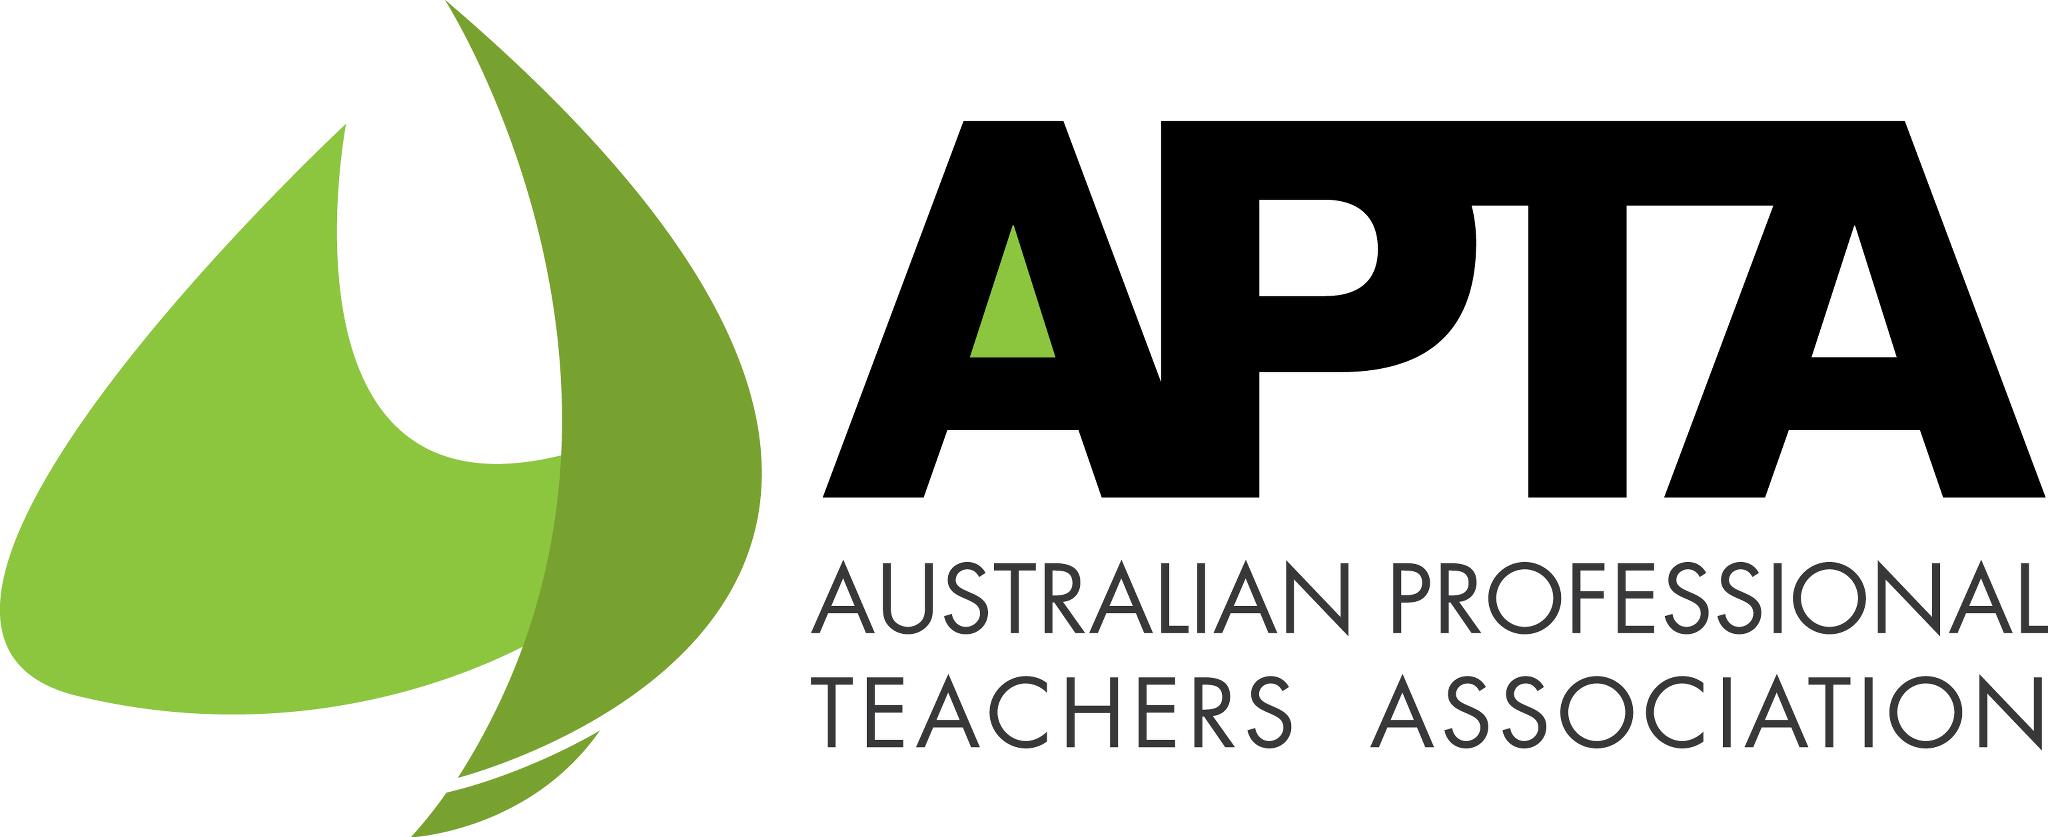 Australian Professional Teachers Association